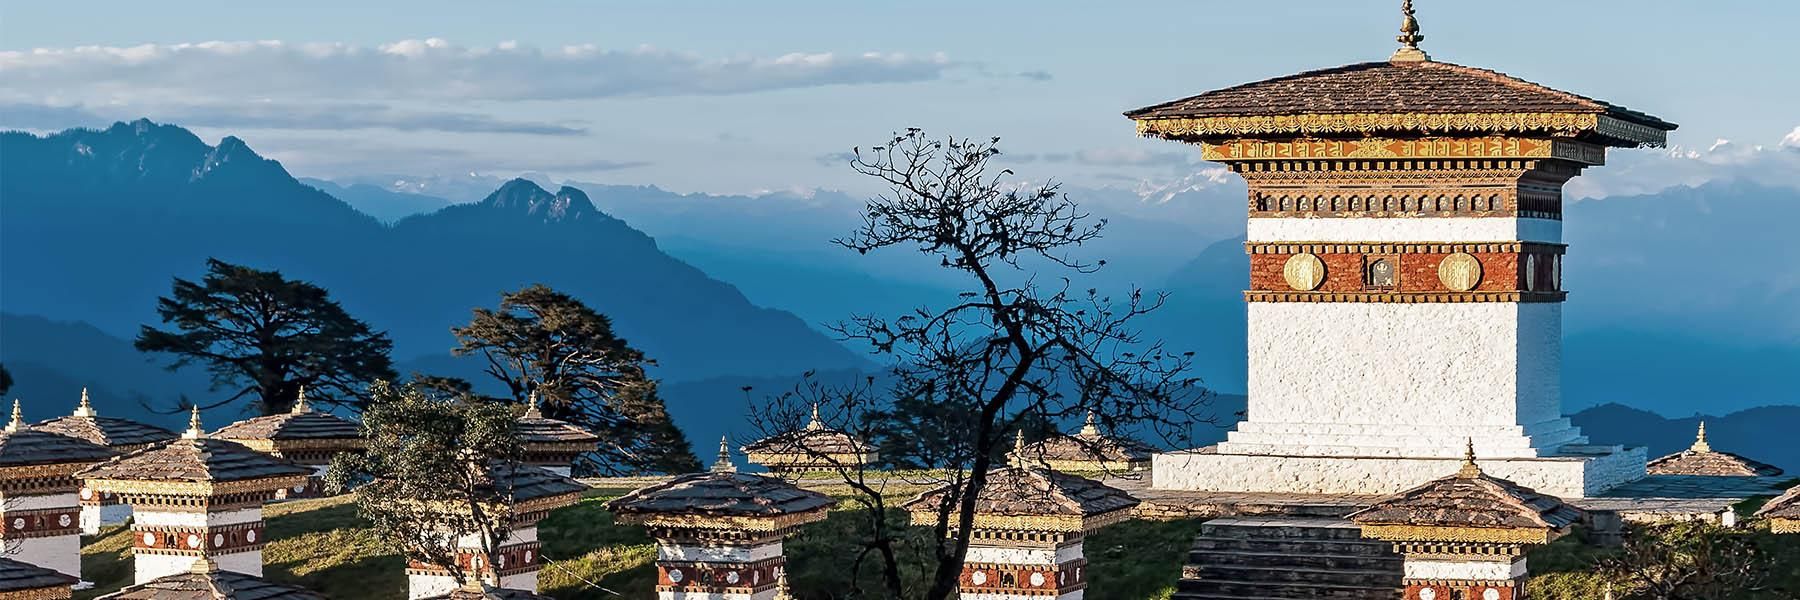 Bhutan Mountain Resort, Bumthang 